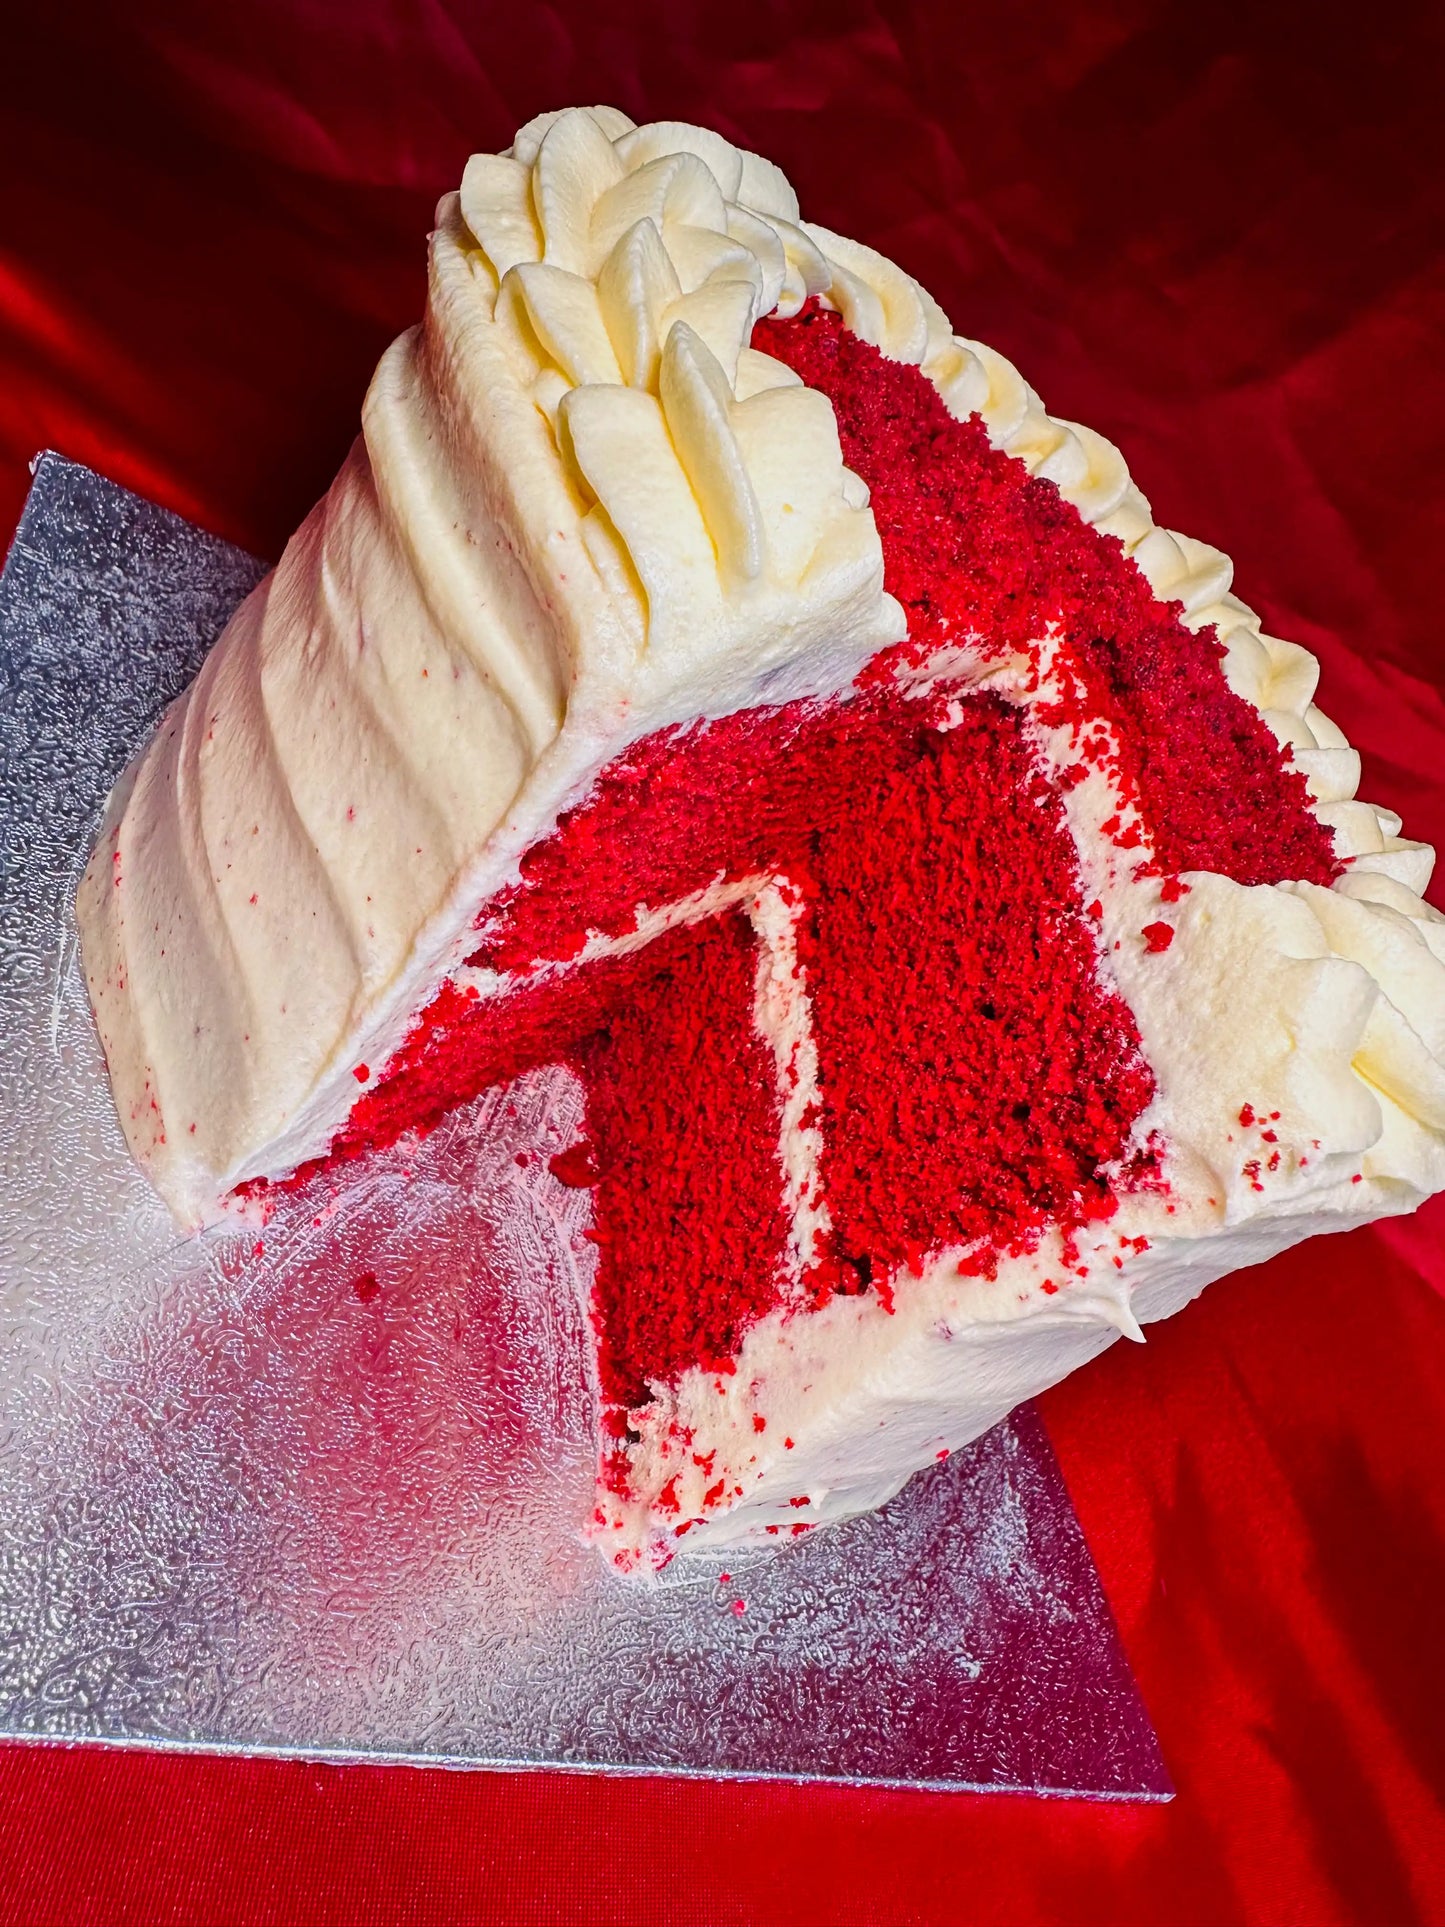 Red Velvet Cake - Premium Cakes & Dessert Bars from Cake Trays - Just £34.99! Shop now at Cake Trays